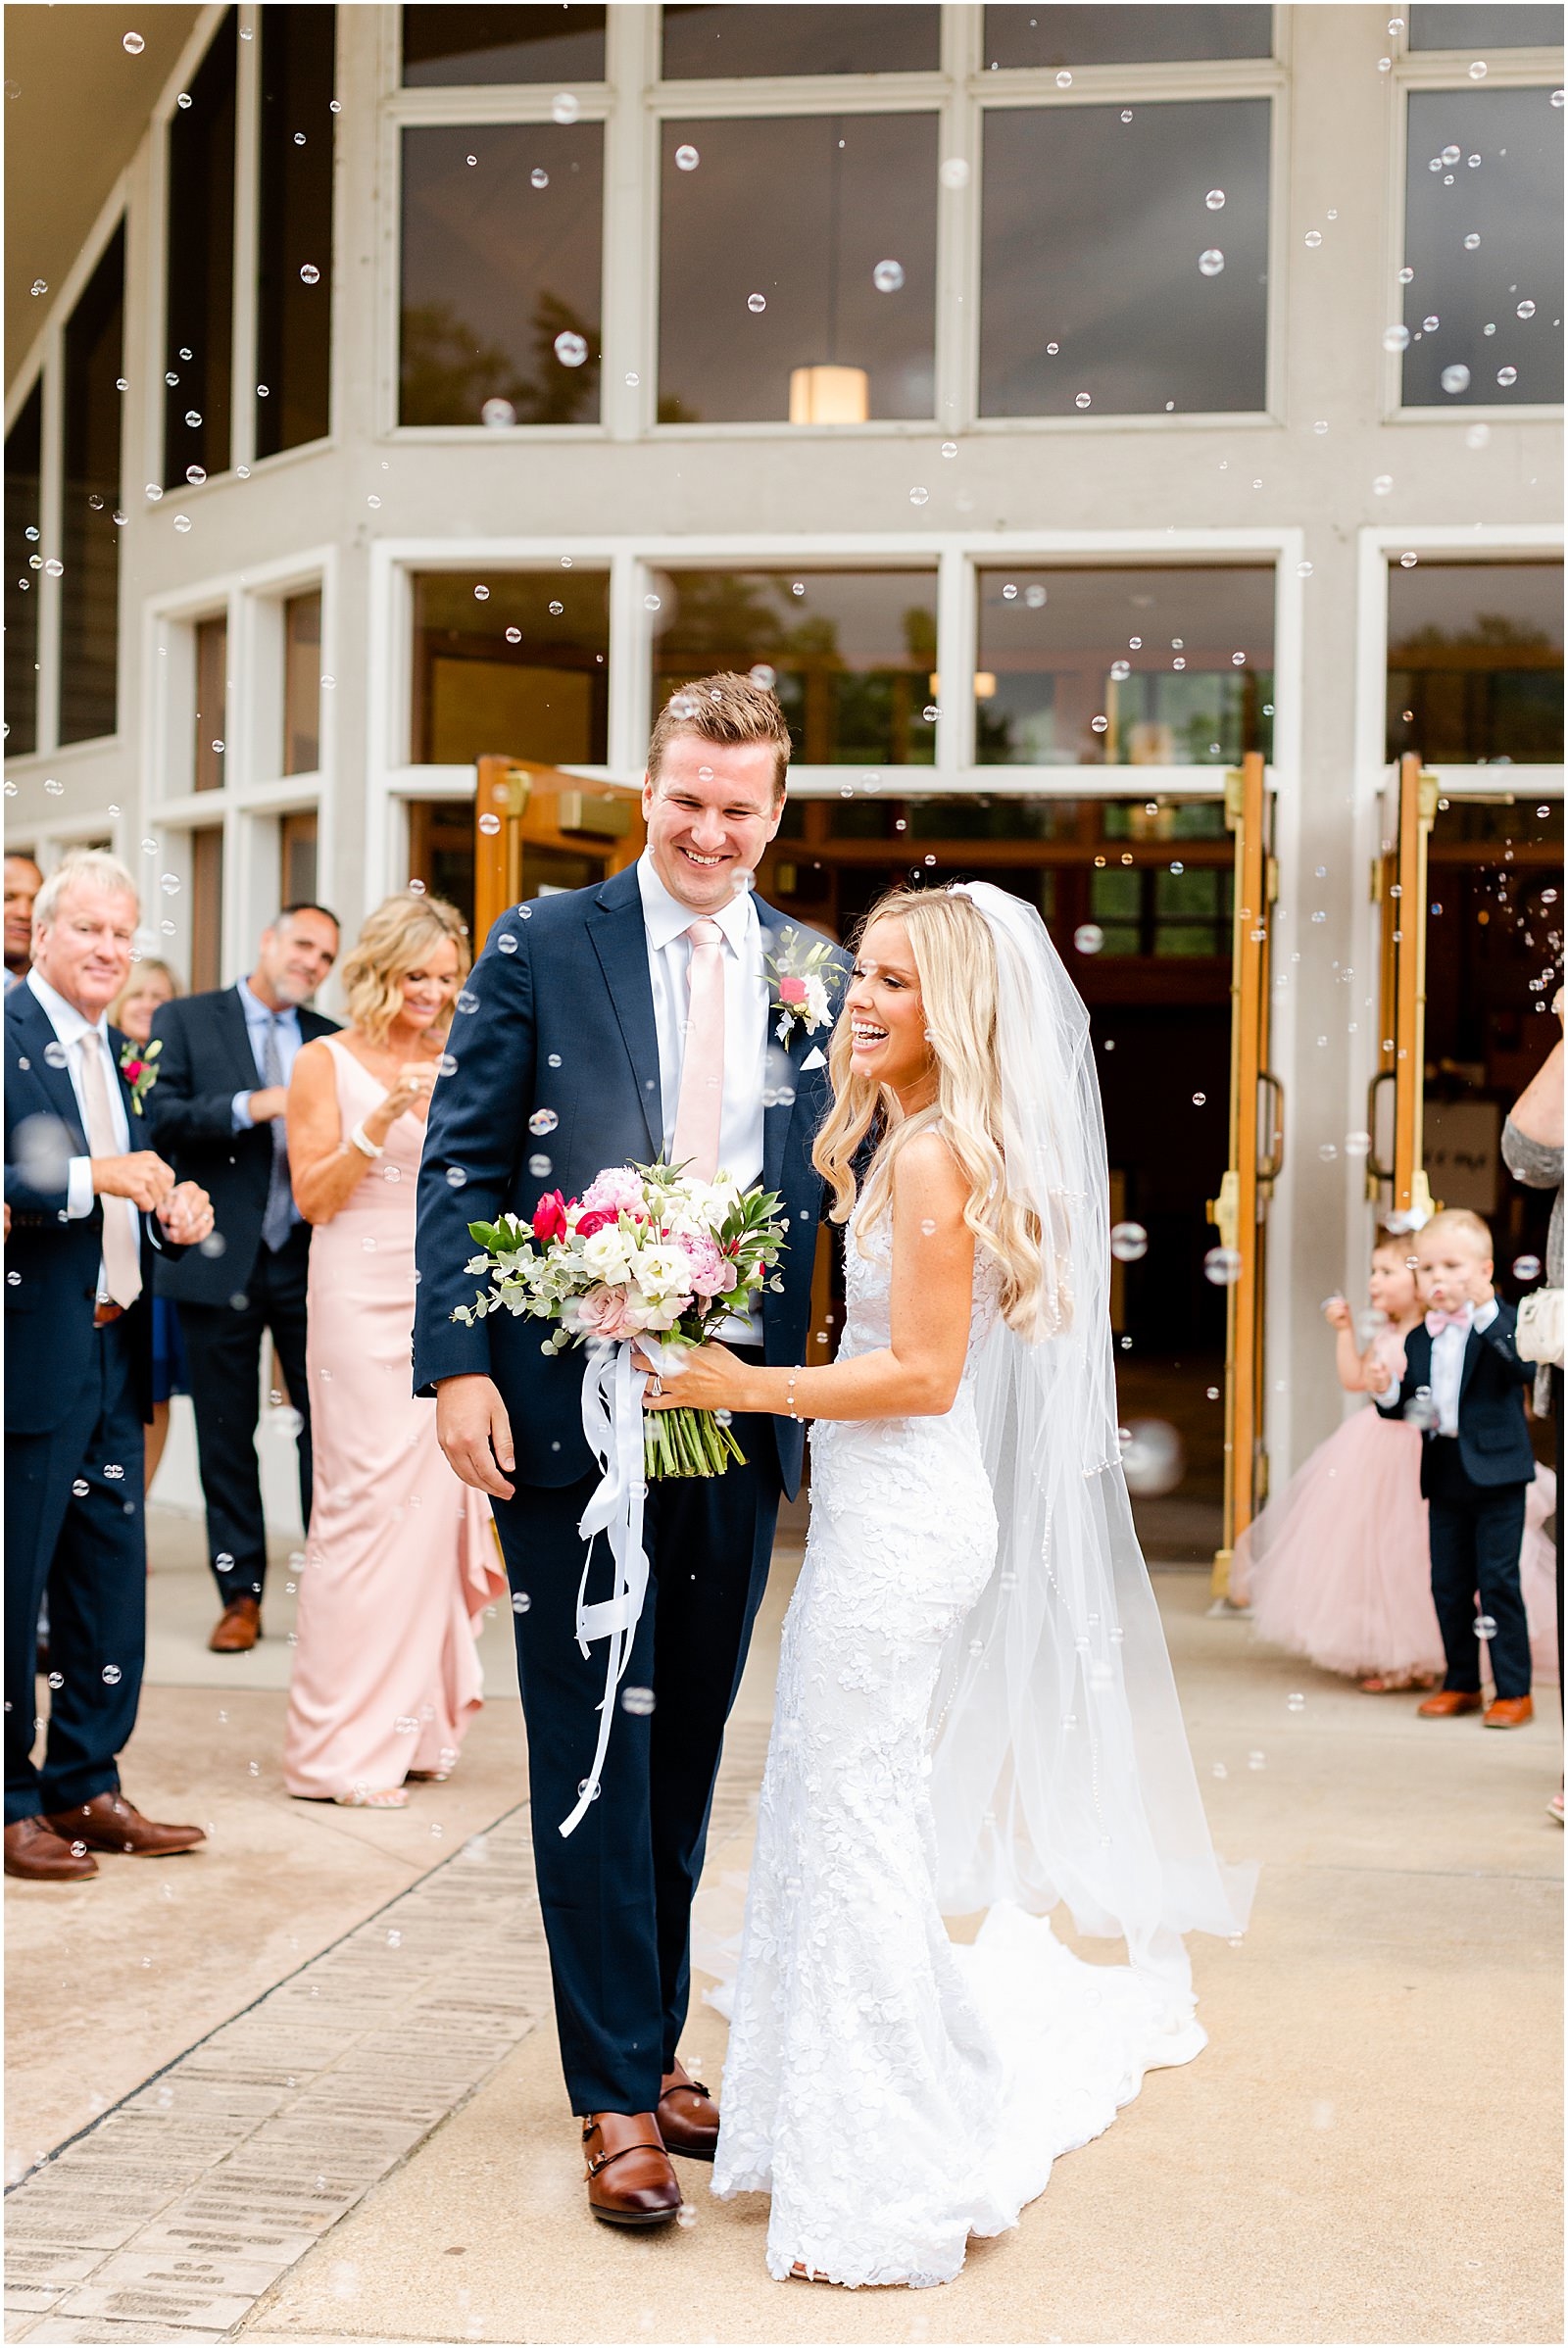 An Evansville Country Club Wedding | Madison and Christiaan | Bret and Brandie | Evansville Photographers | @bretandbrandie-0135.jpg